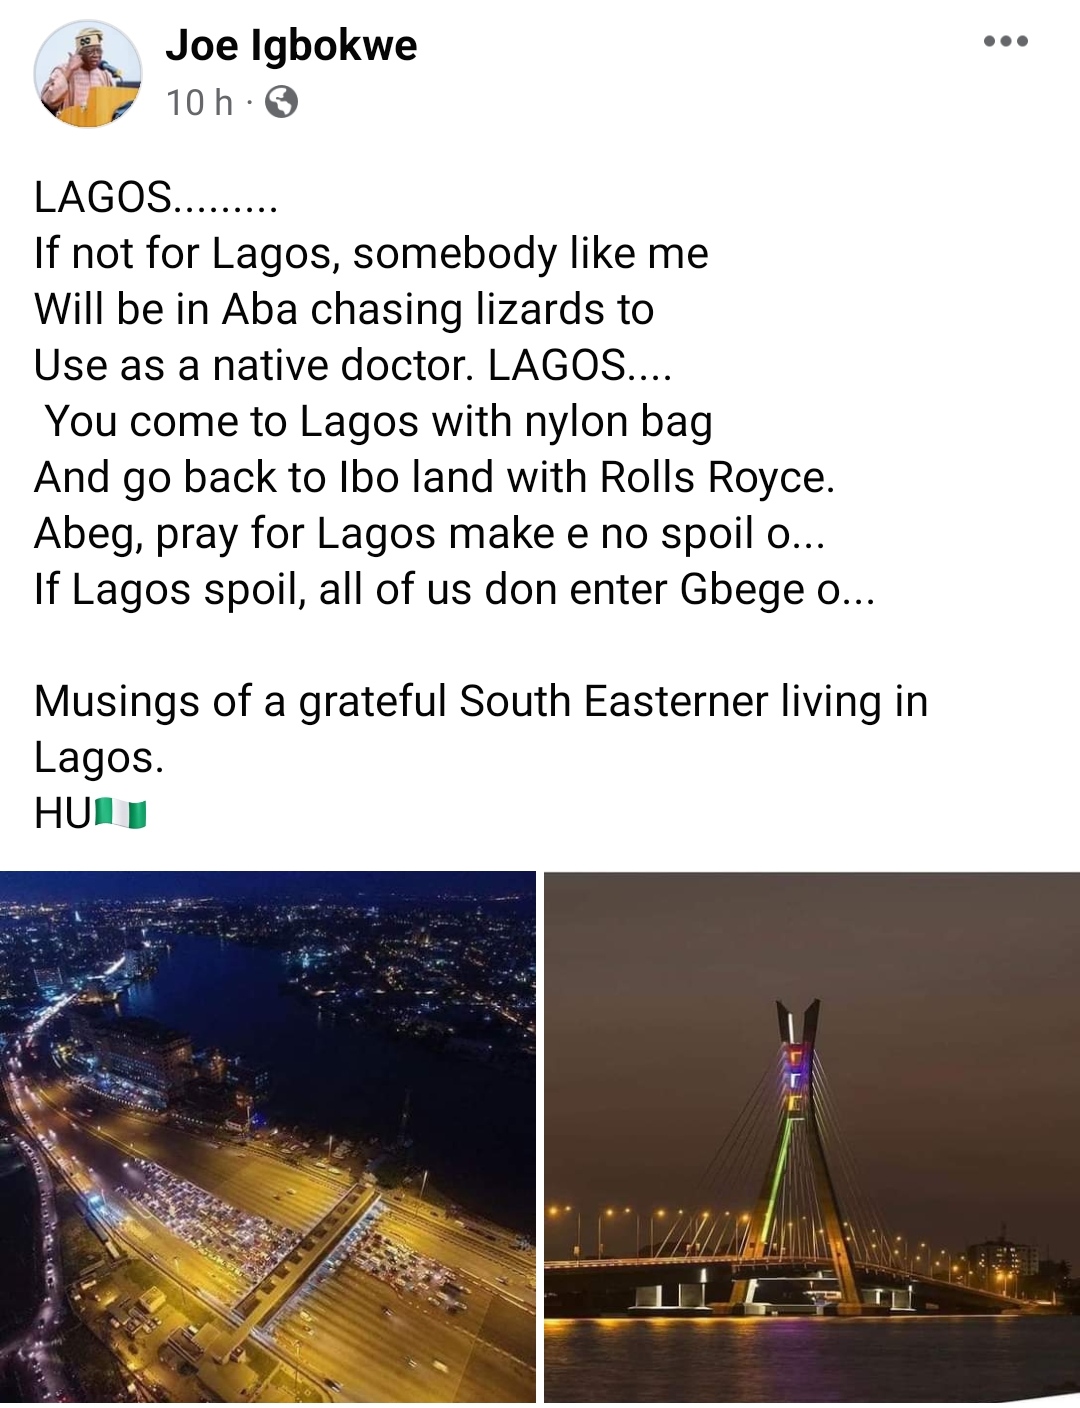 You Came To Lagos With Nylon Bag, Go Back To Igbo Land With Rolls Royce - Joe Igbokwe